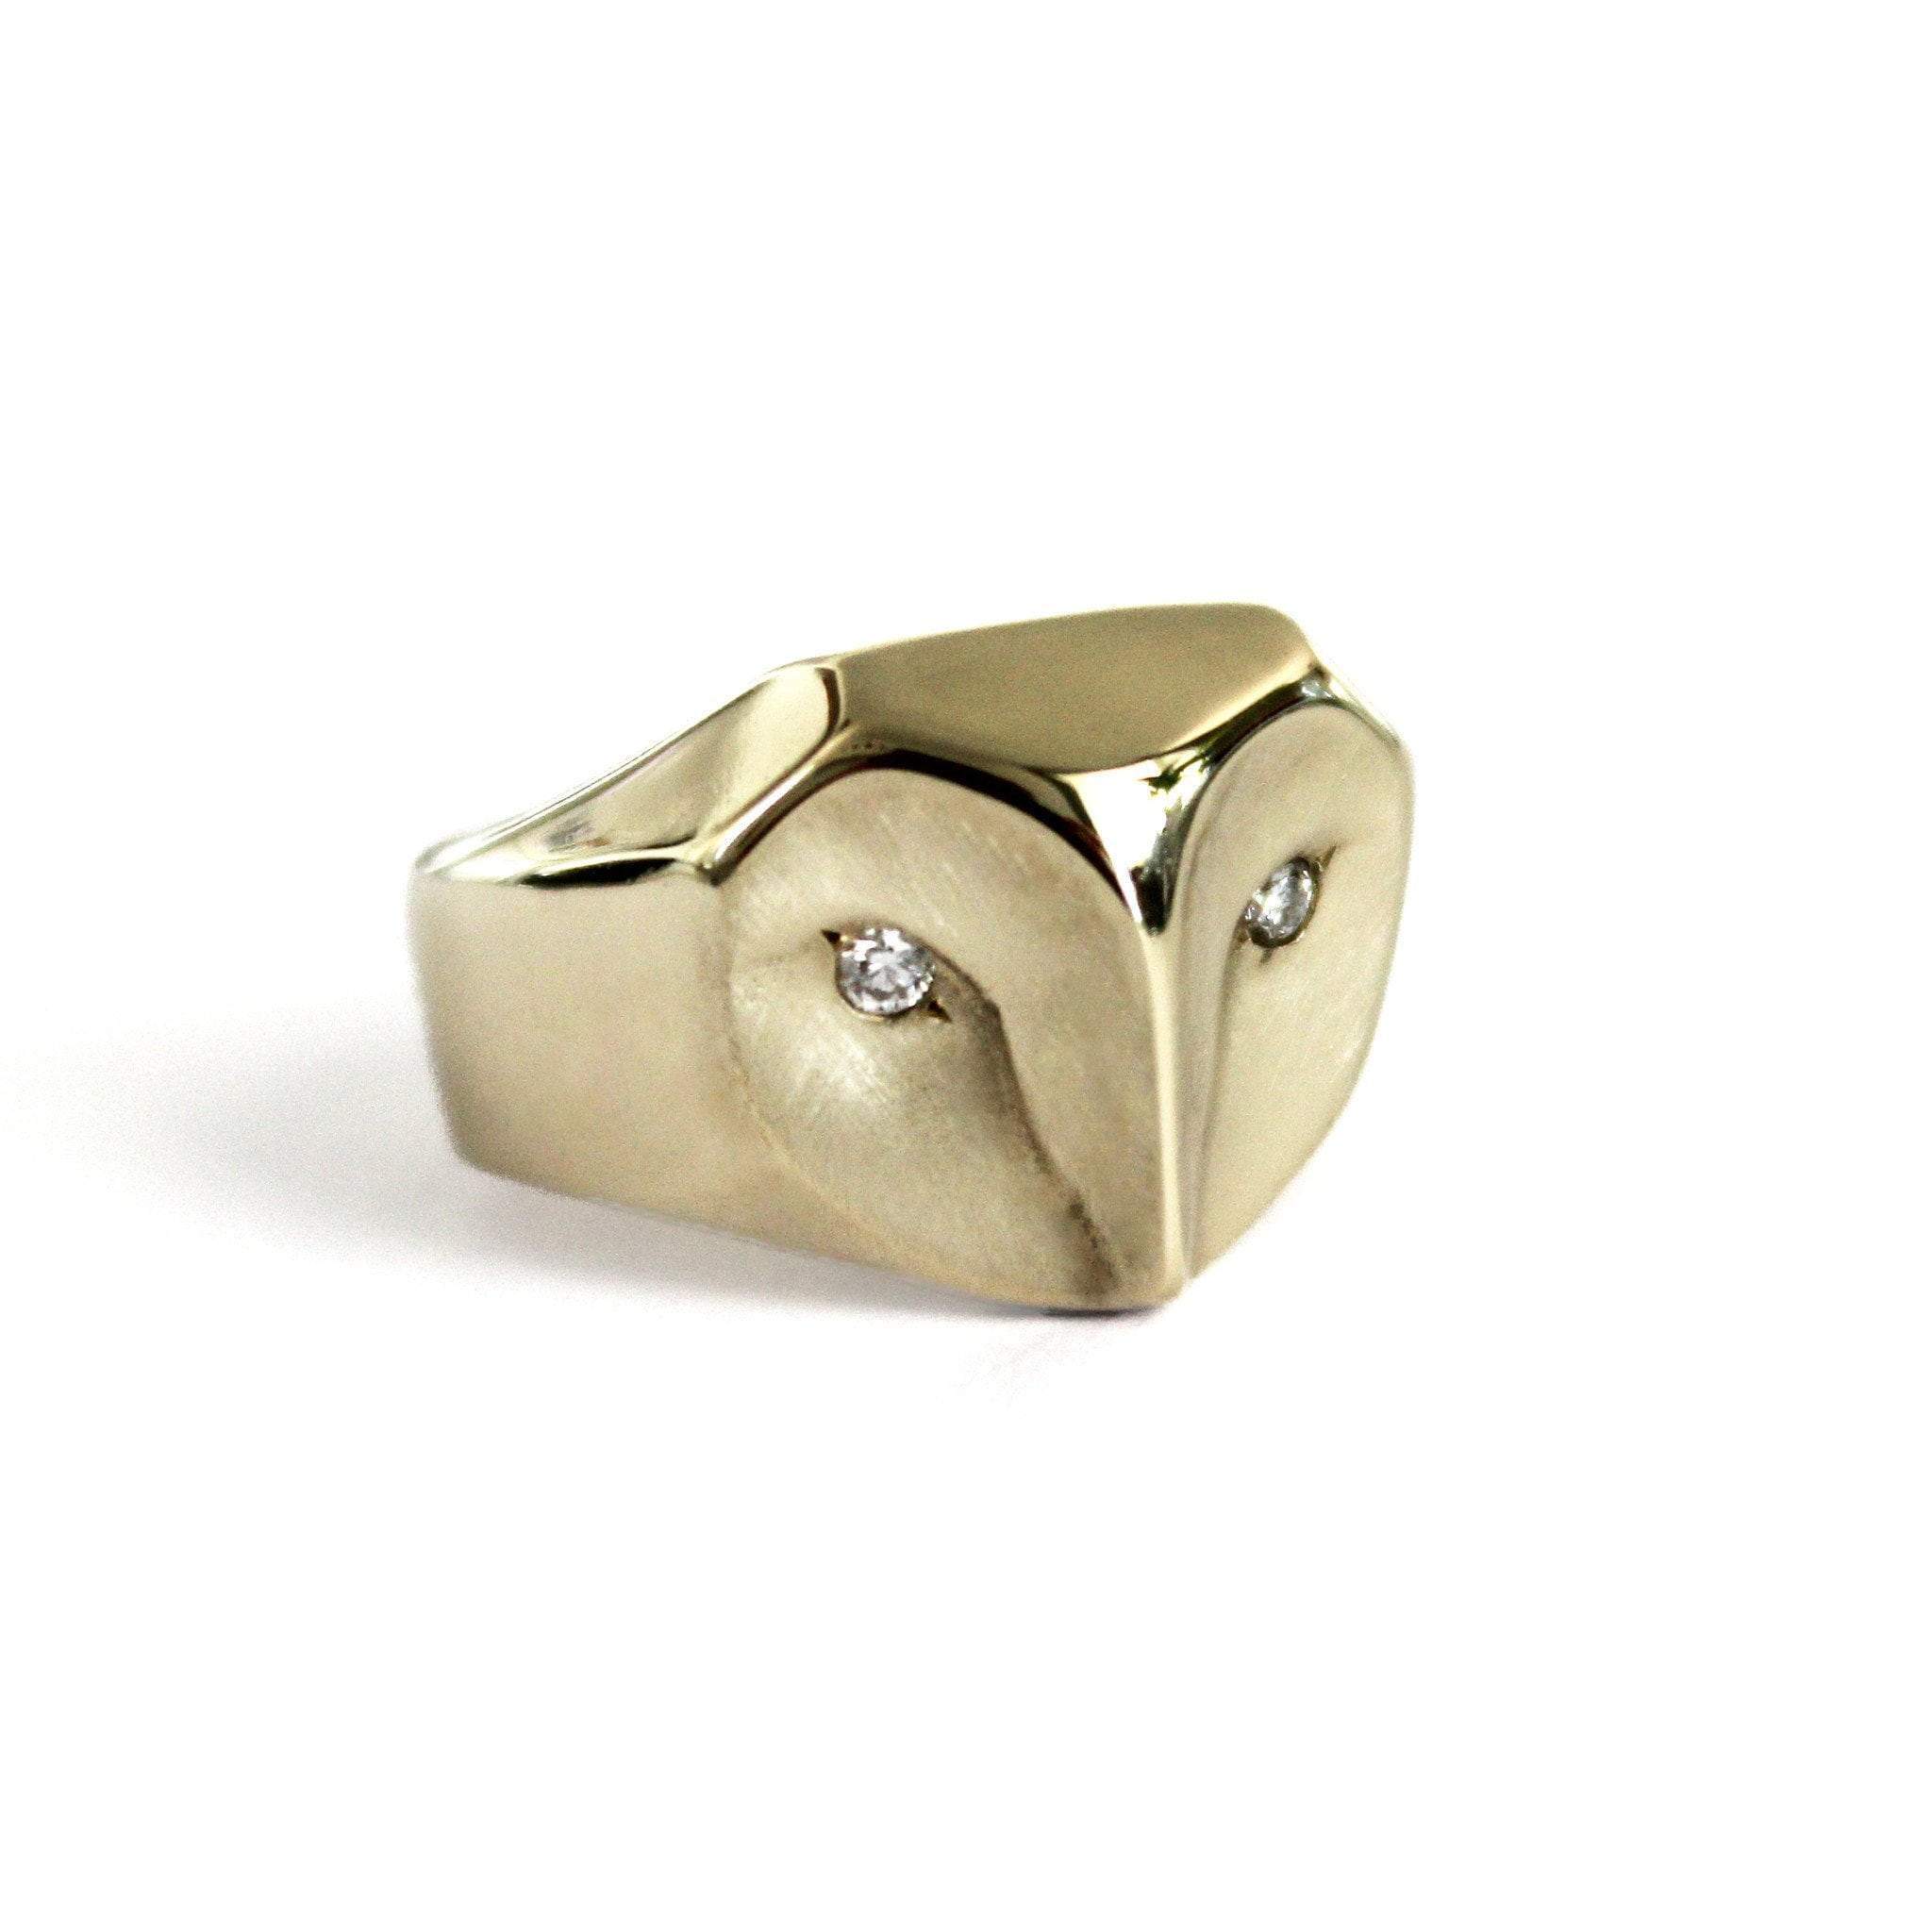 jewelry 14k gold owl ring with diamonds 28798264836209